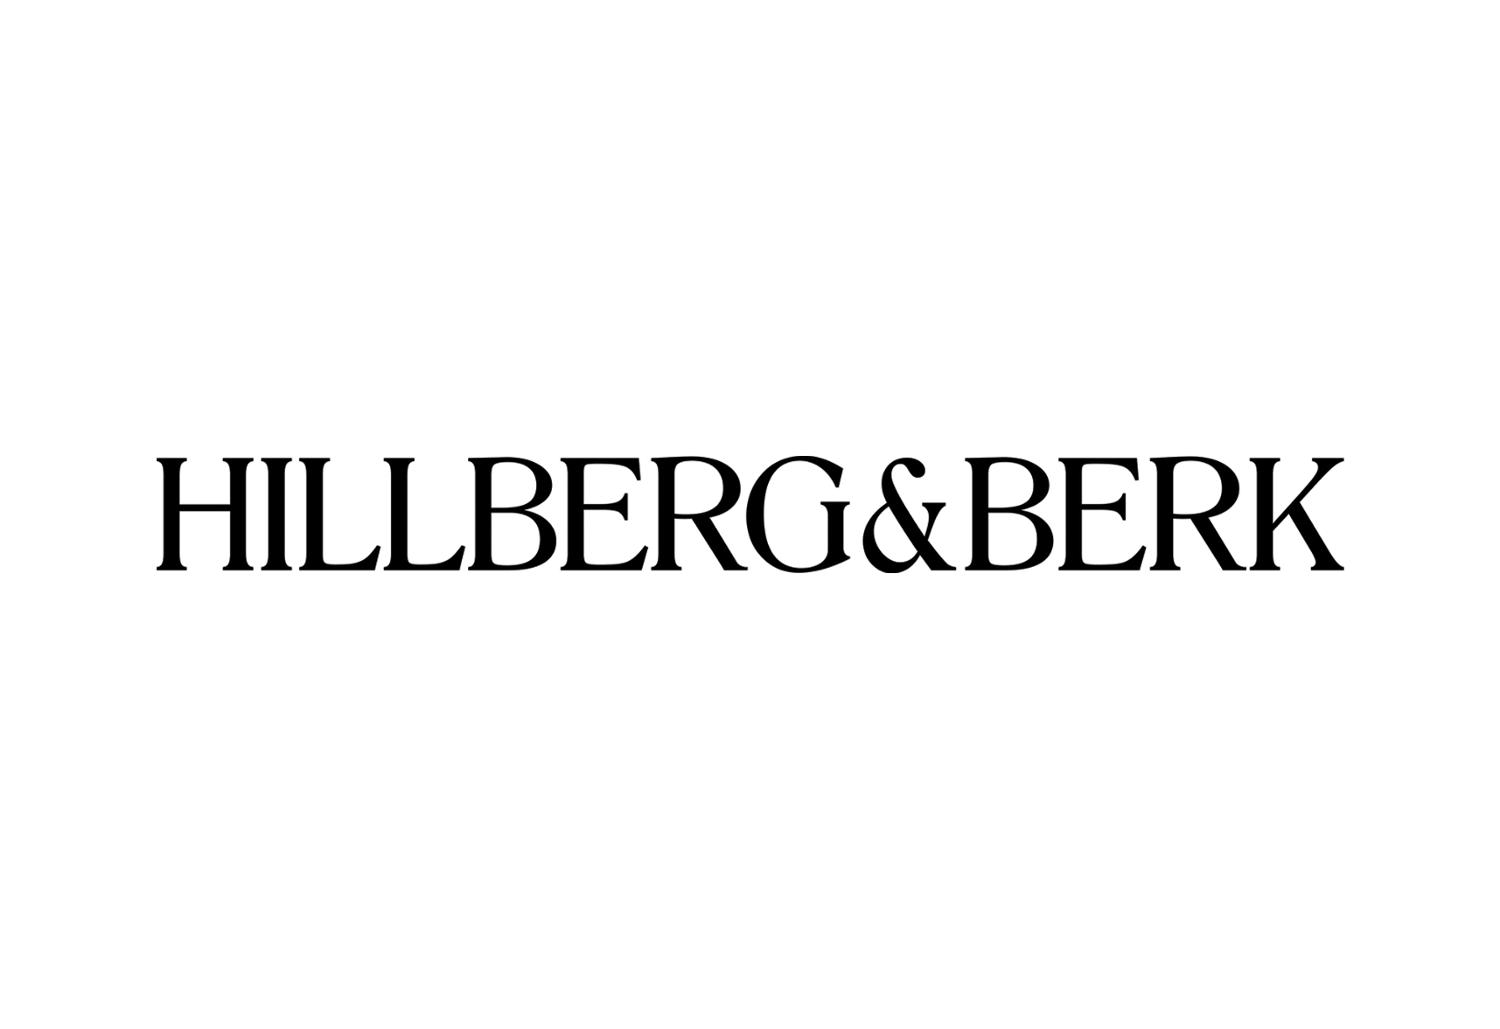 Hillberg and Berk are sponsors